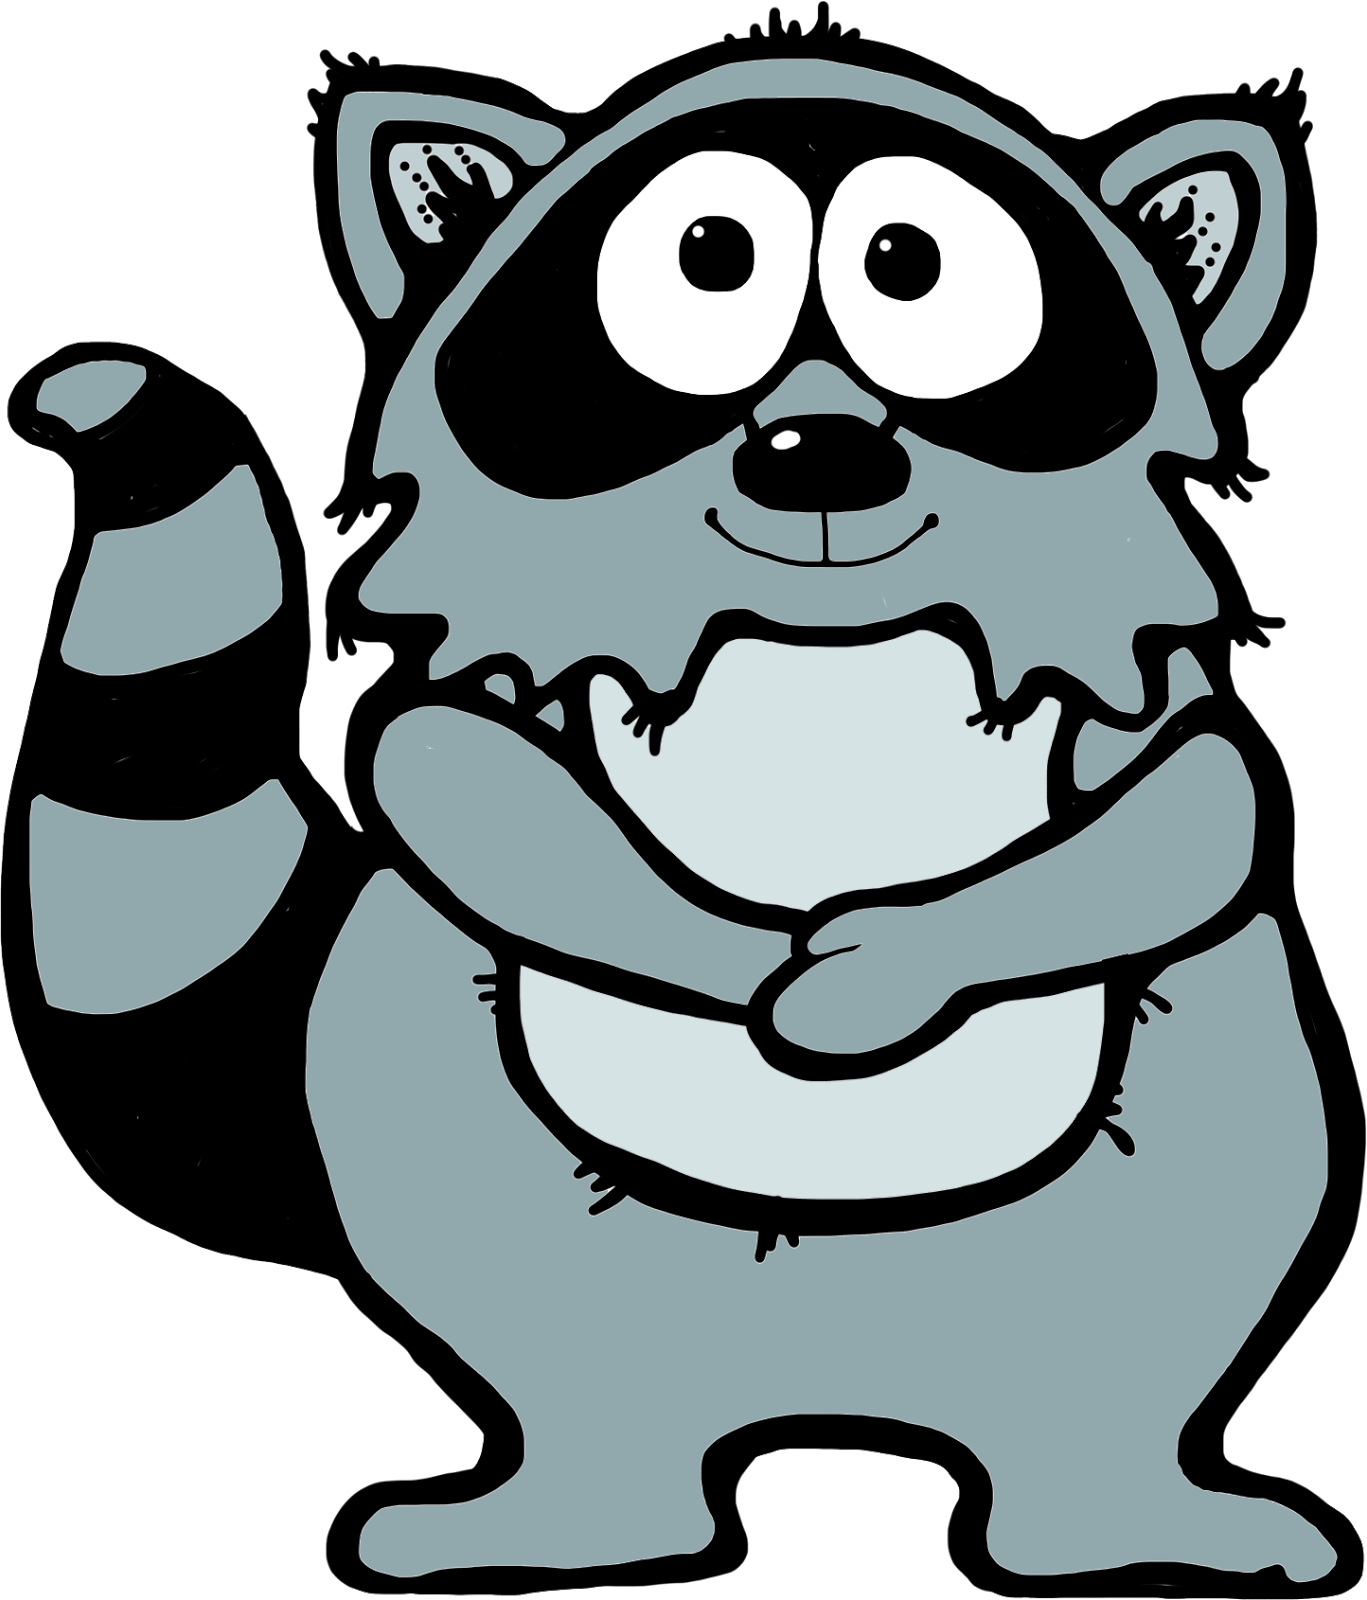 A Cartoon Of A Raccoon